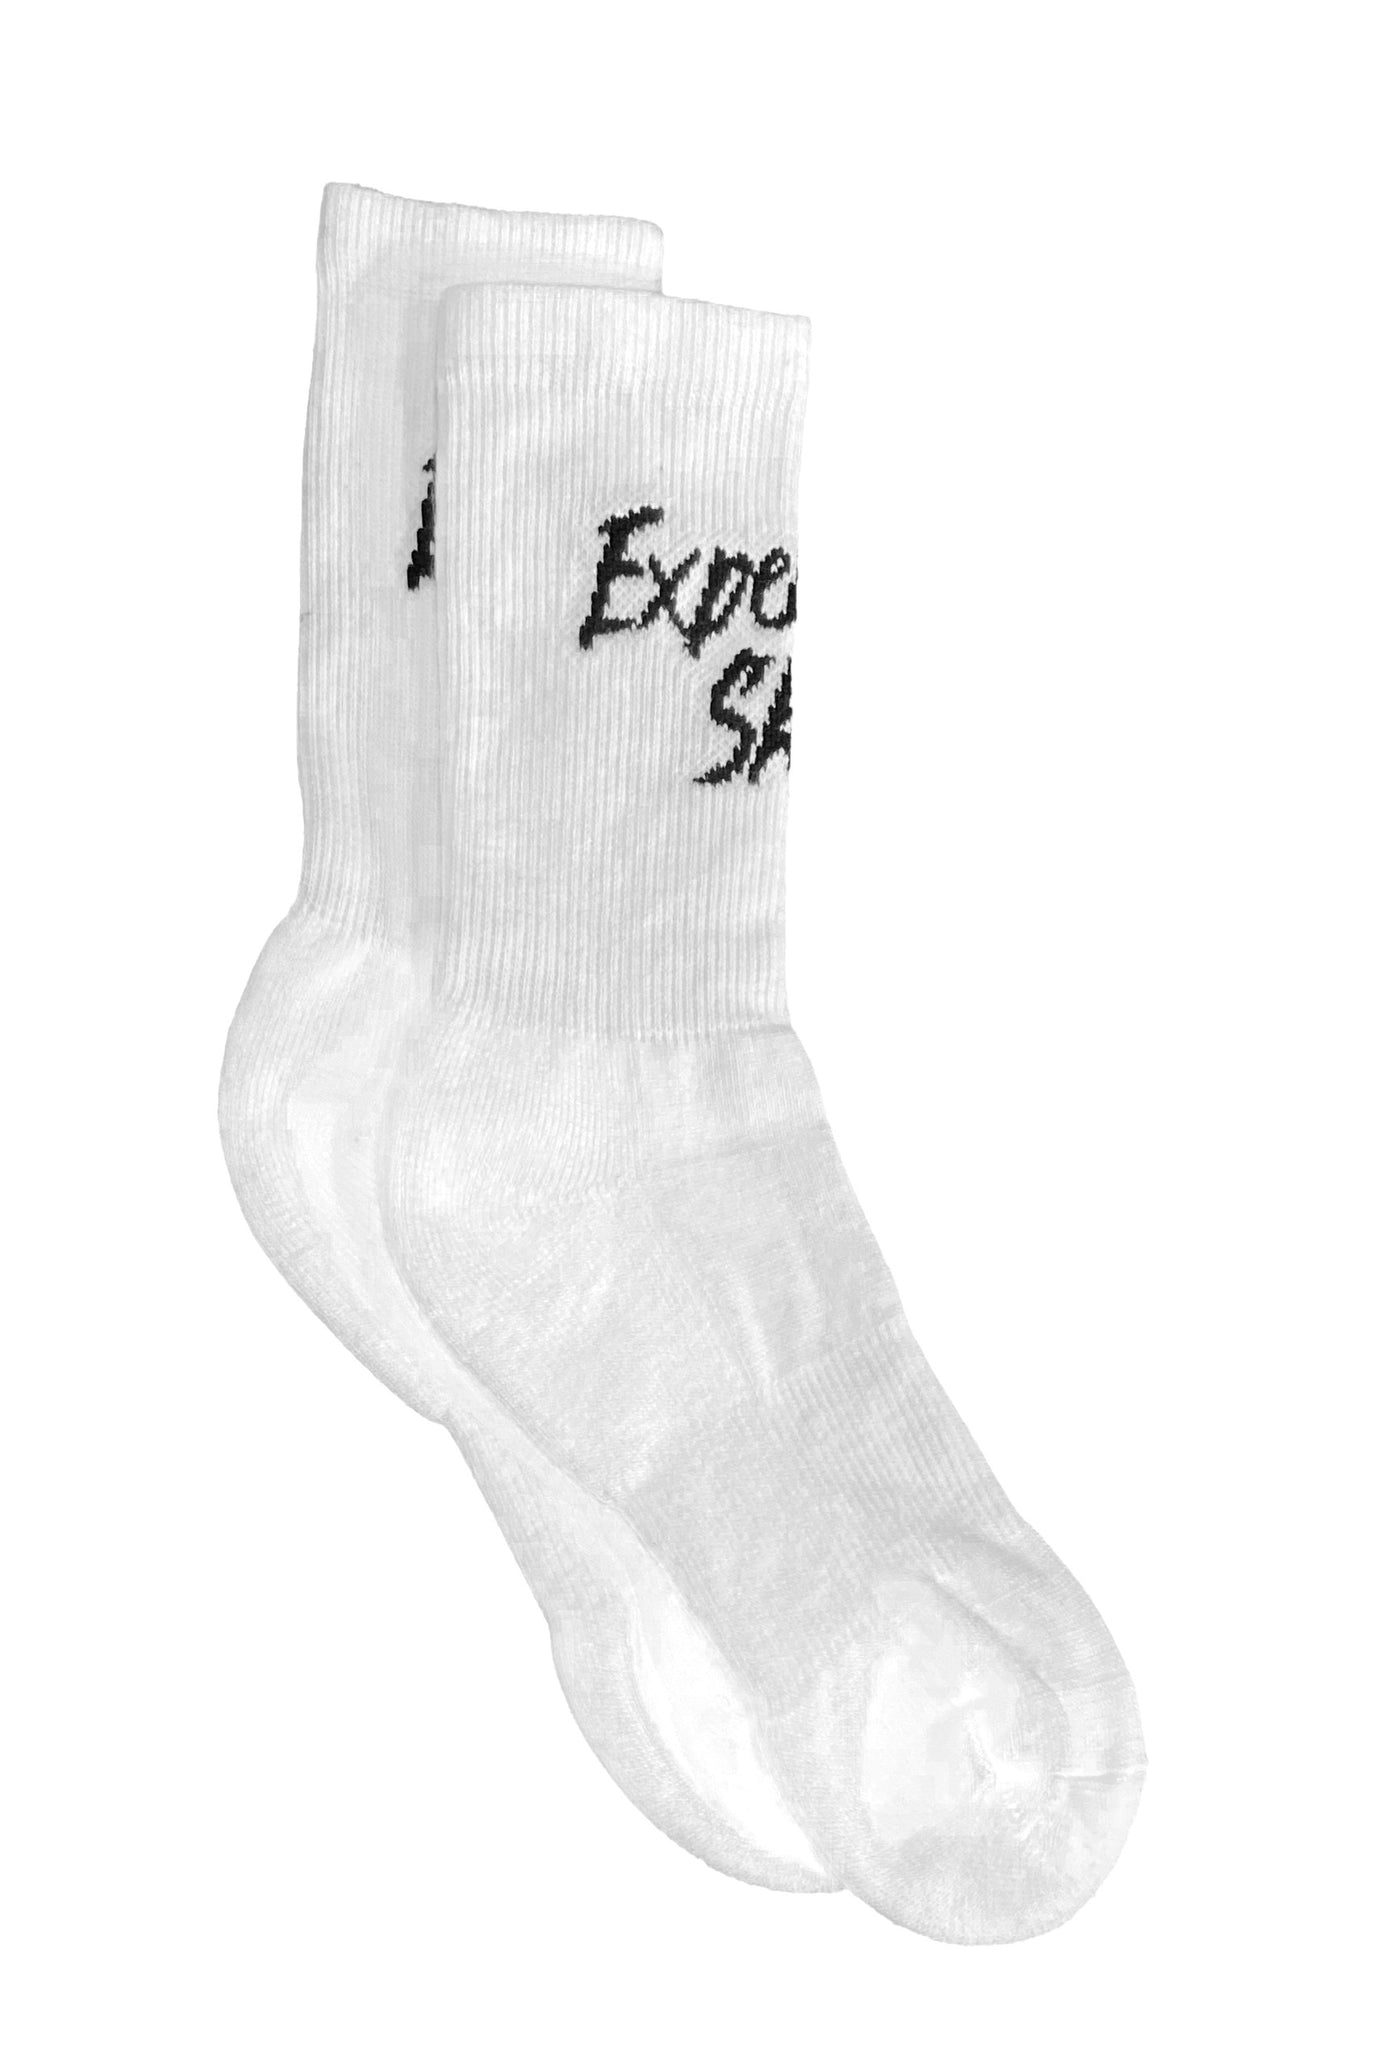 mercedestourism Expensive Skin Socks